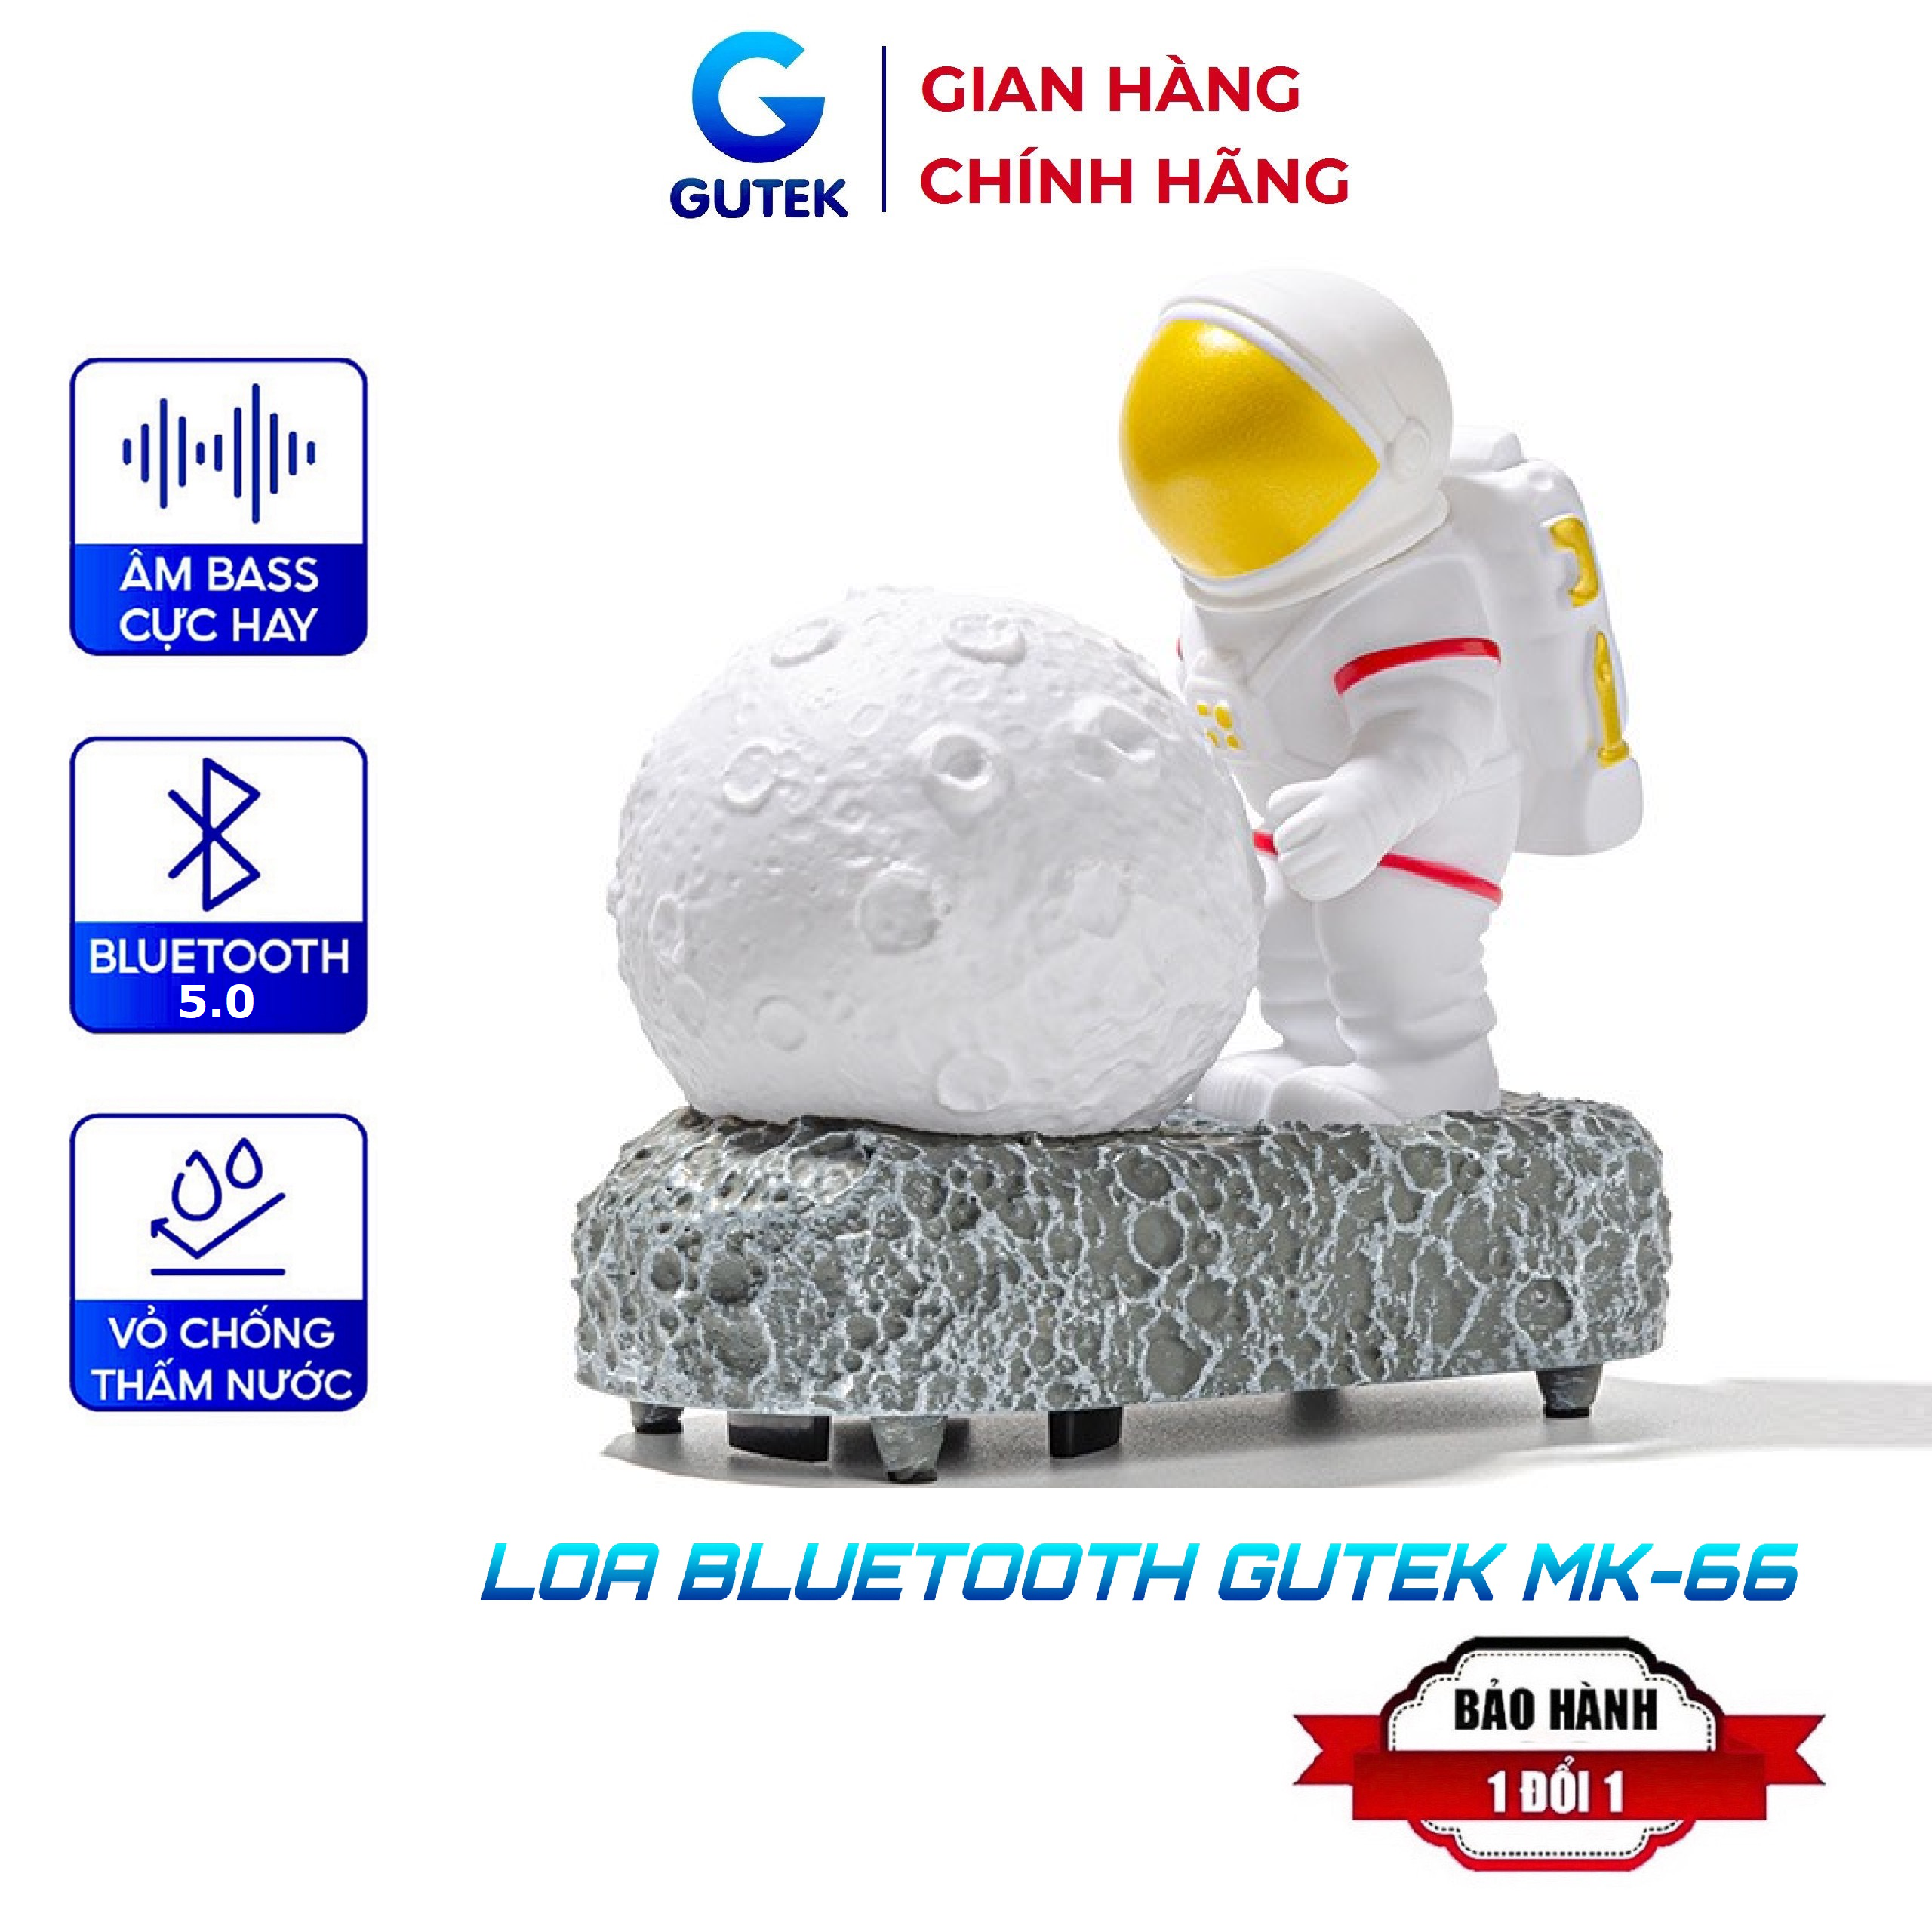 Bluetooth speaker mini Gutek MK66 v5.0 figure astronaut wireless music